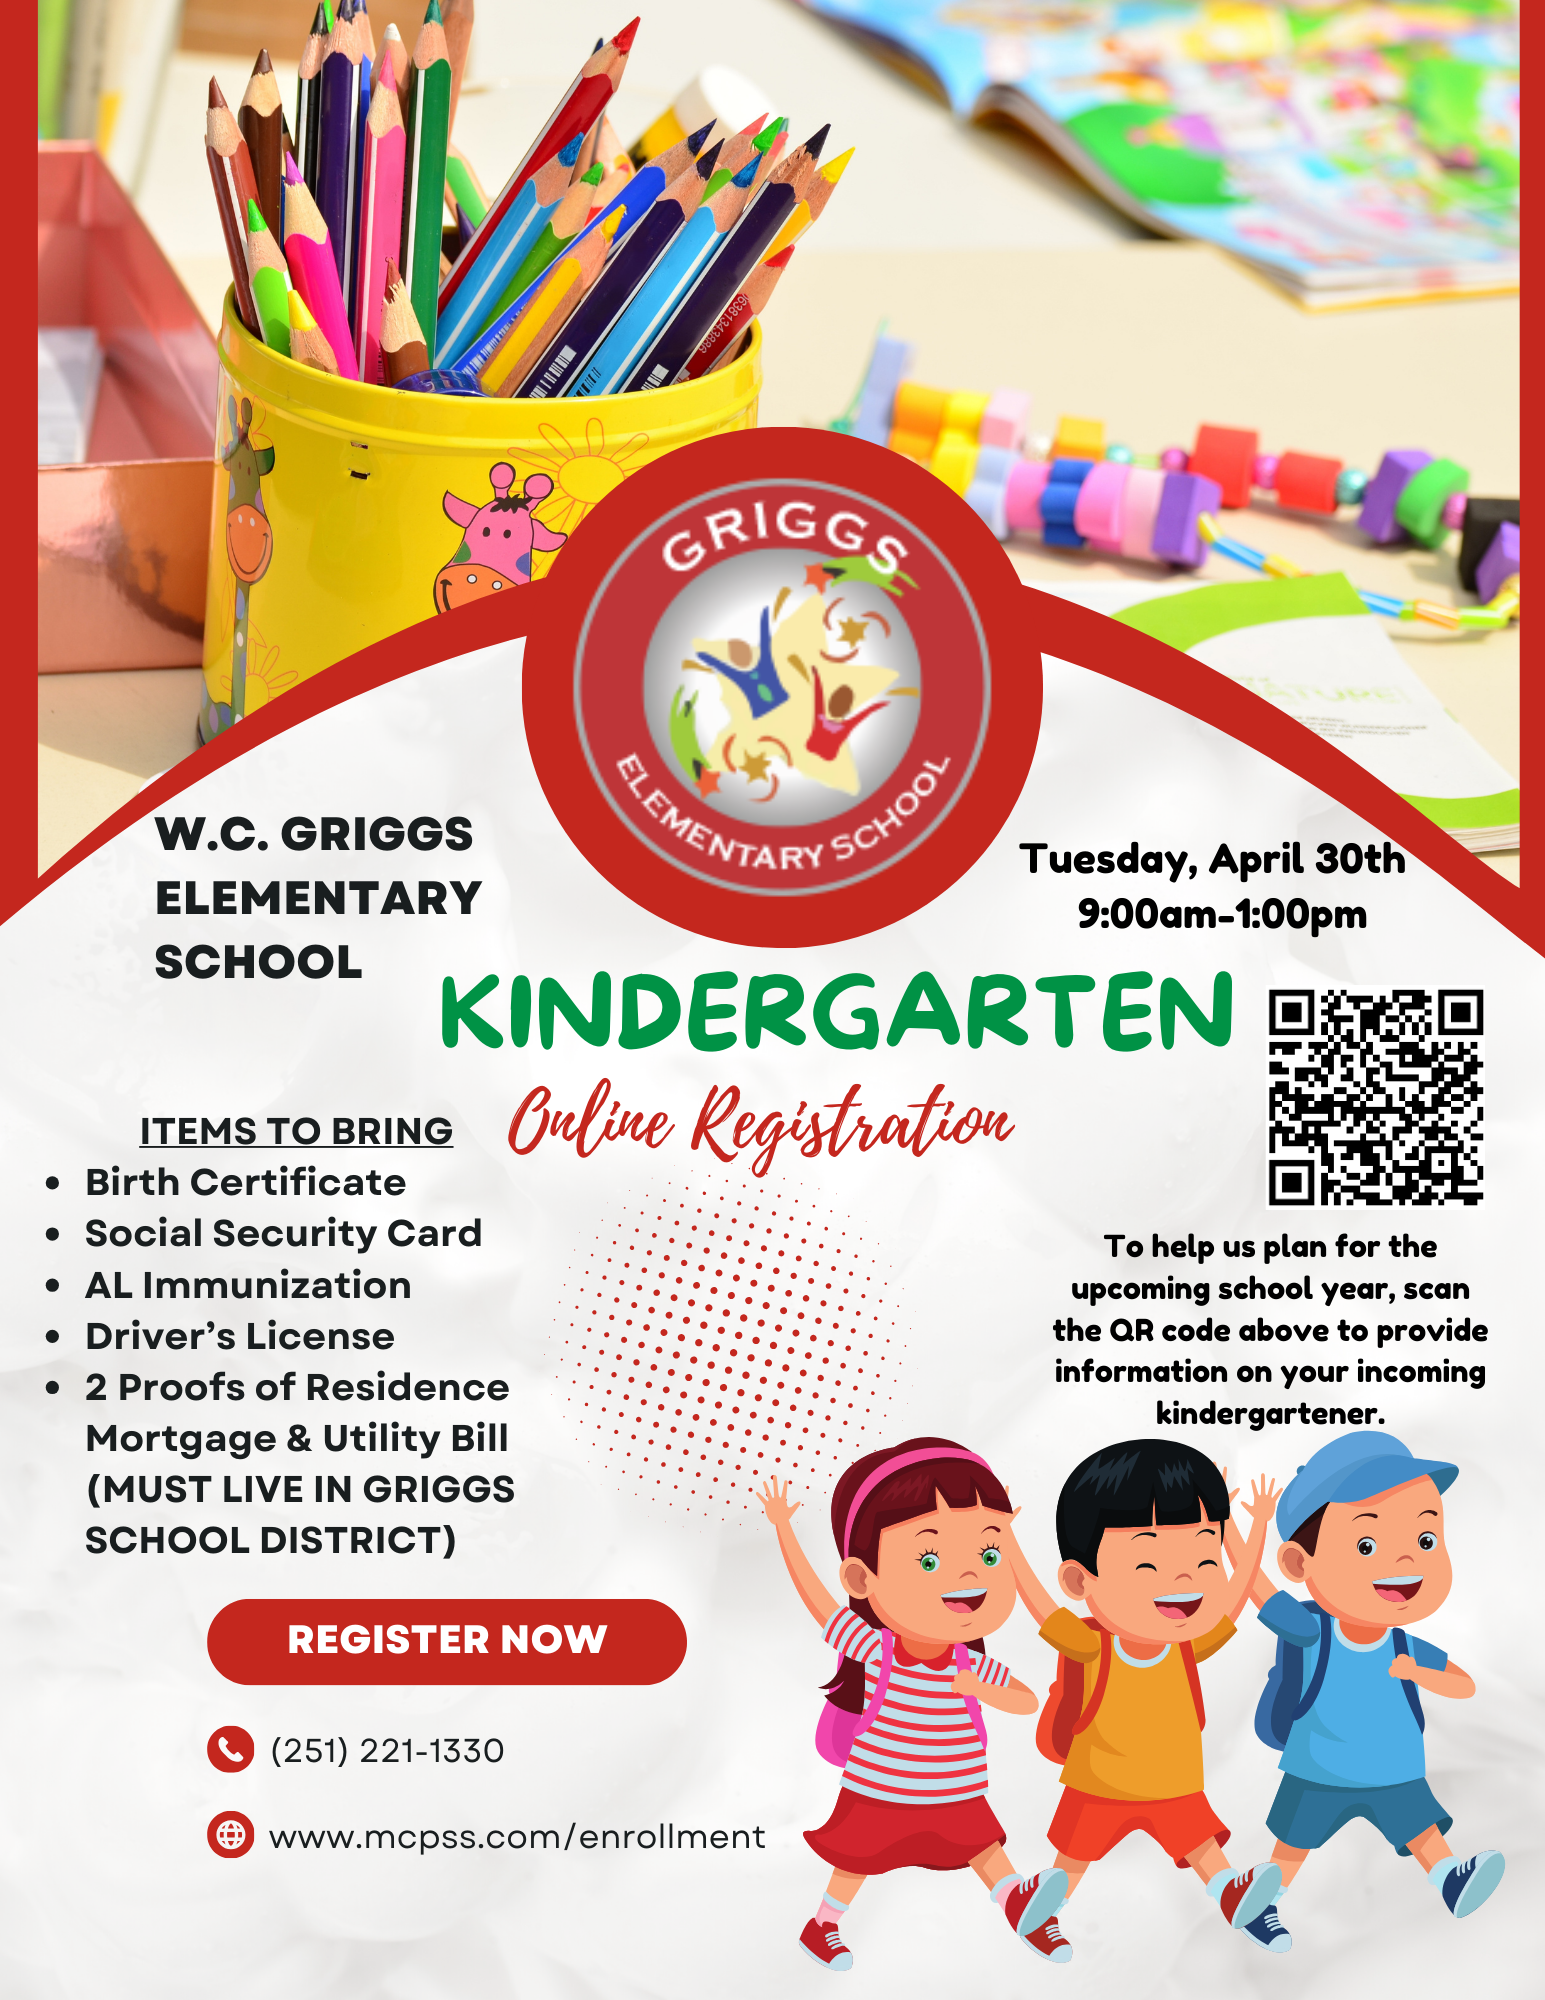 Kindergarten Registration flyer in English